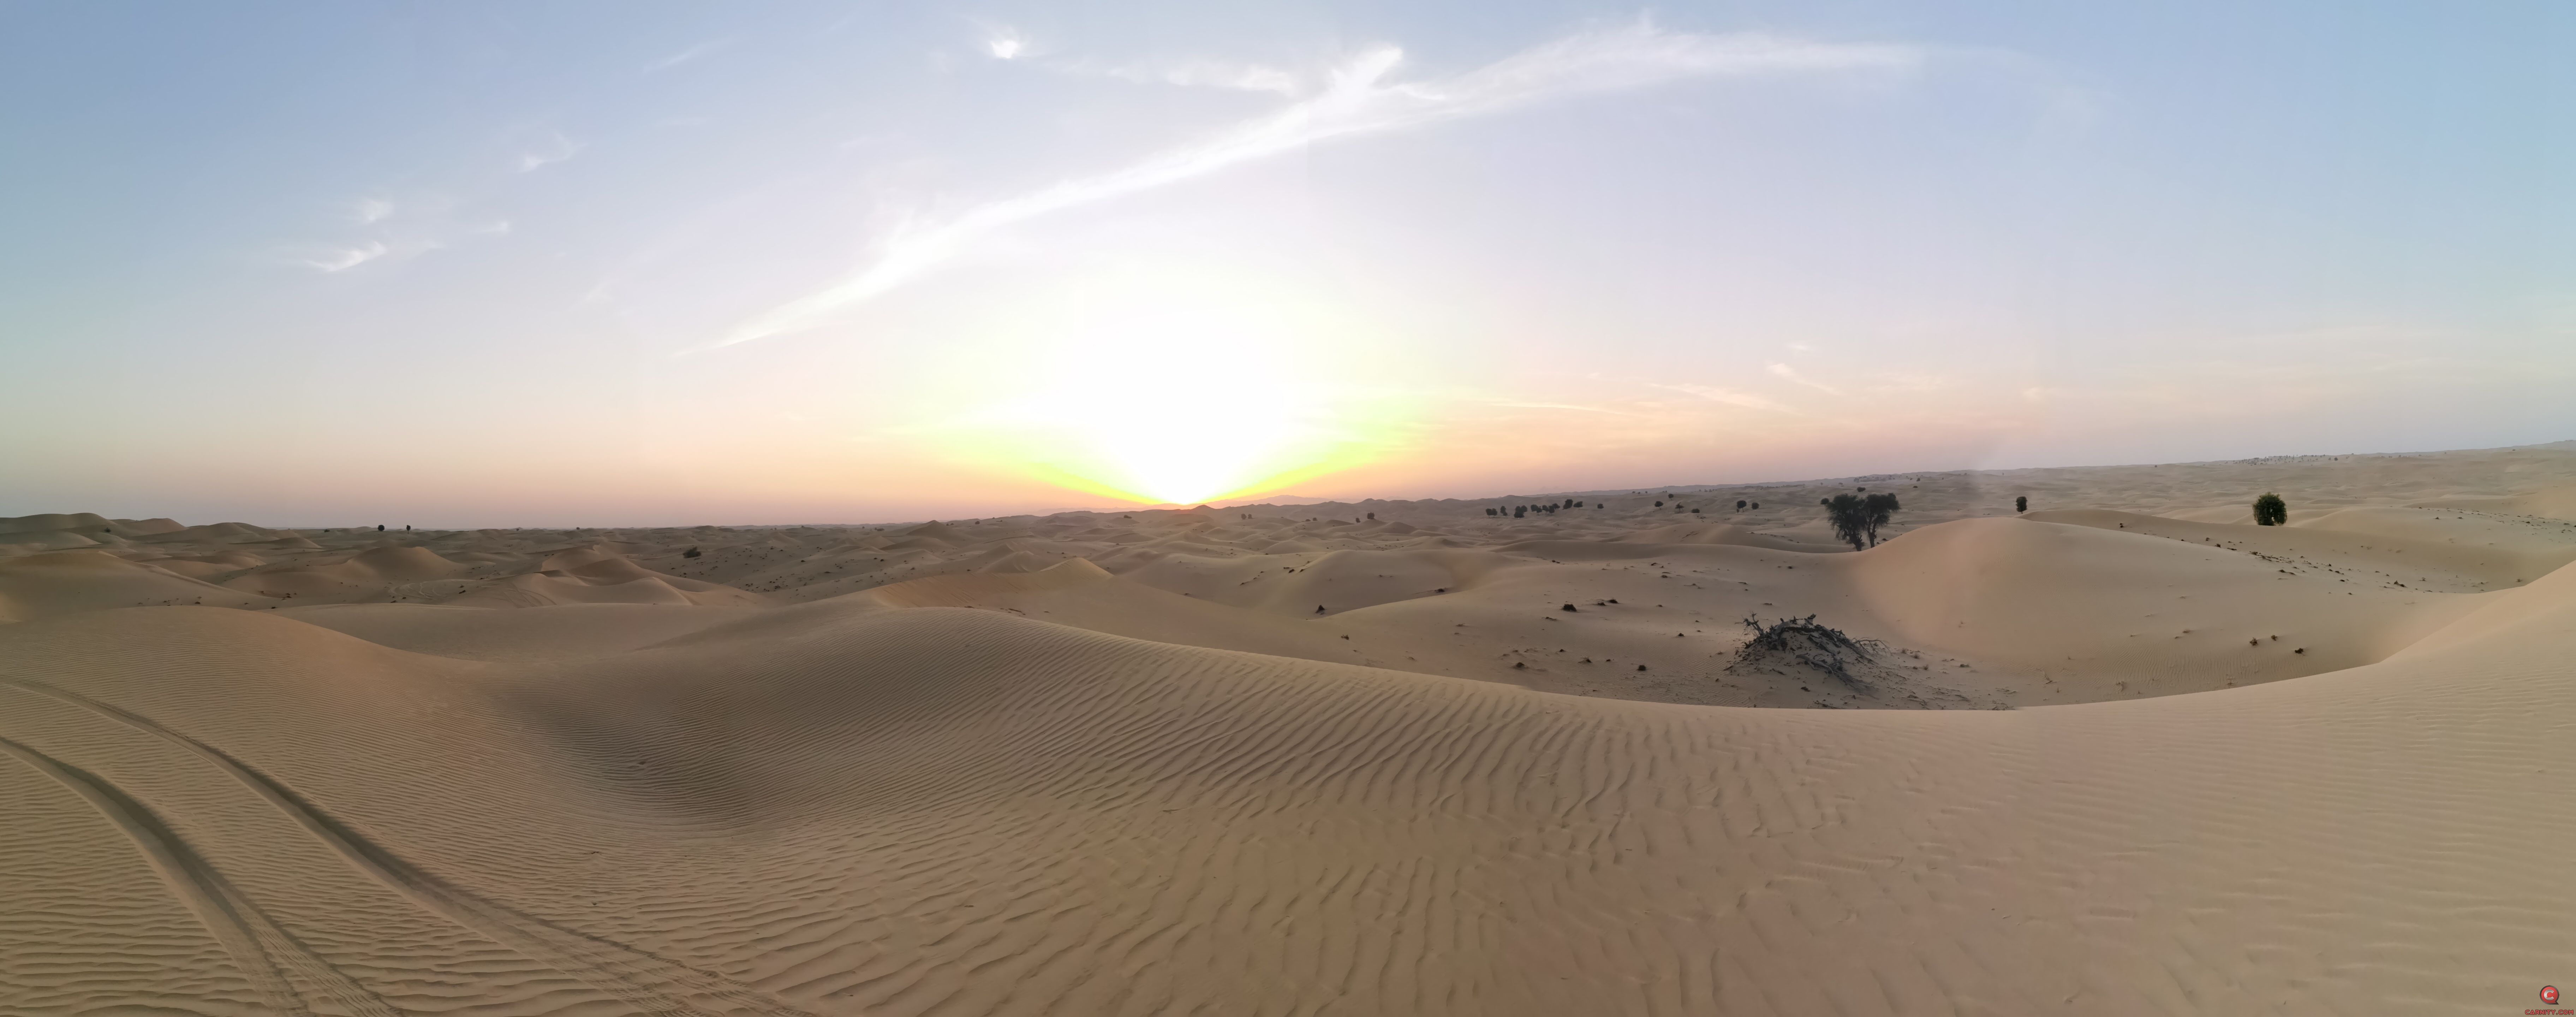 Fewbie Desert Drive - Faqa - Solar Park - 24 Jan 2020